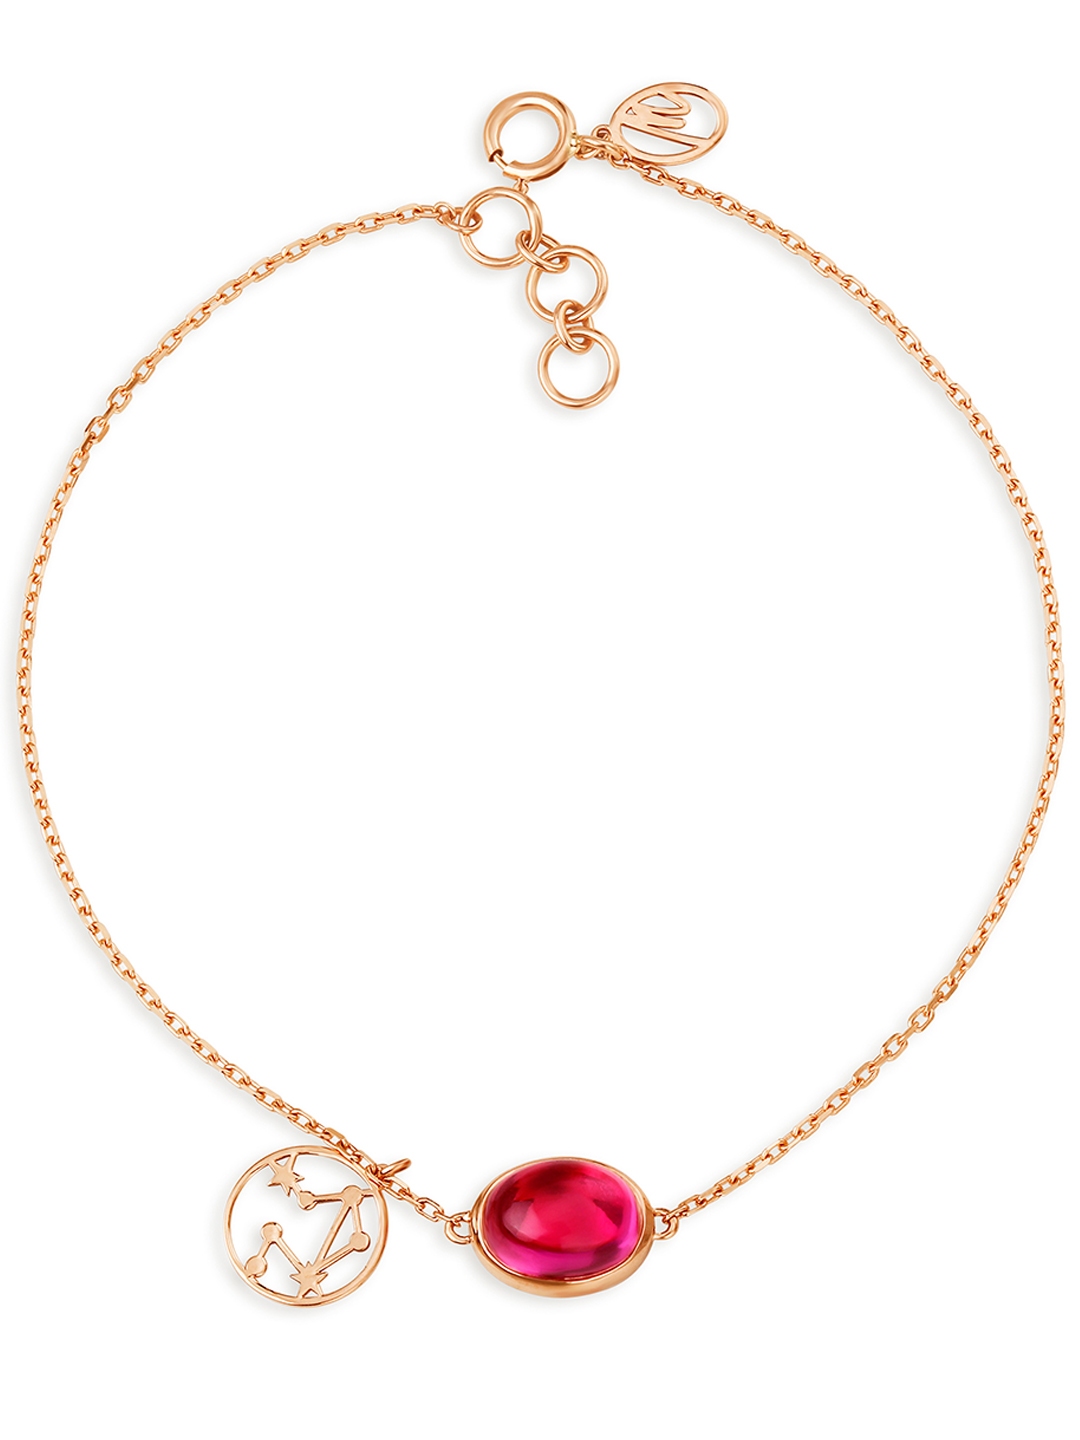 Buy Mia by Tanishq 14k Gold  Diamond Bracelet for Women Online At Best  Price  Tata CLiQ